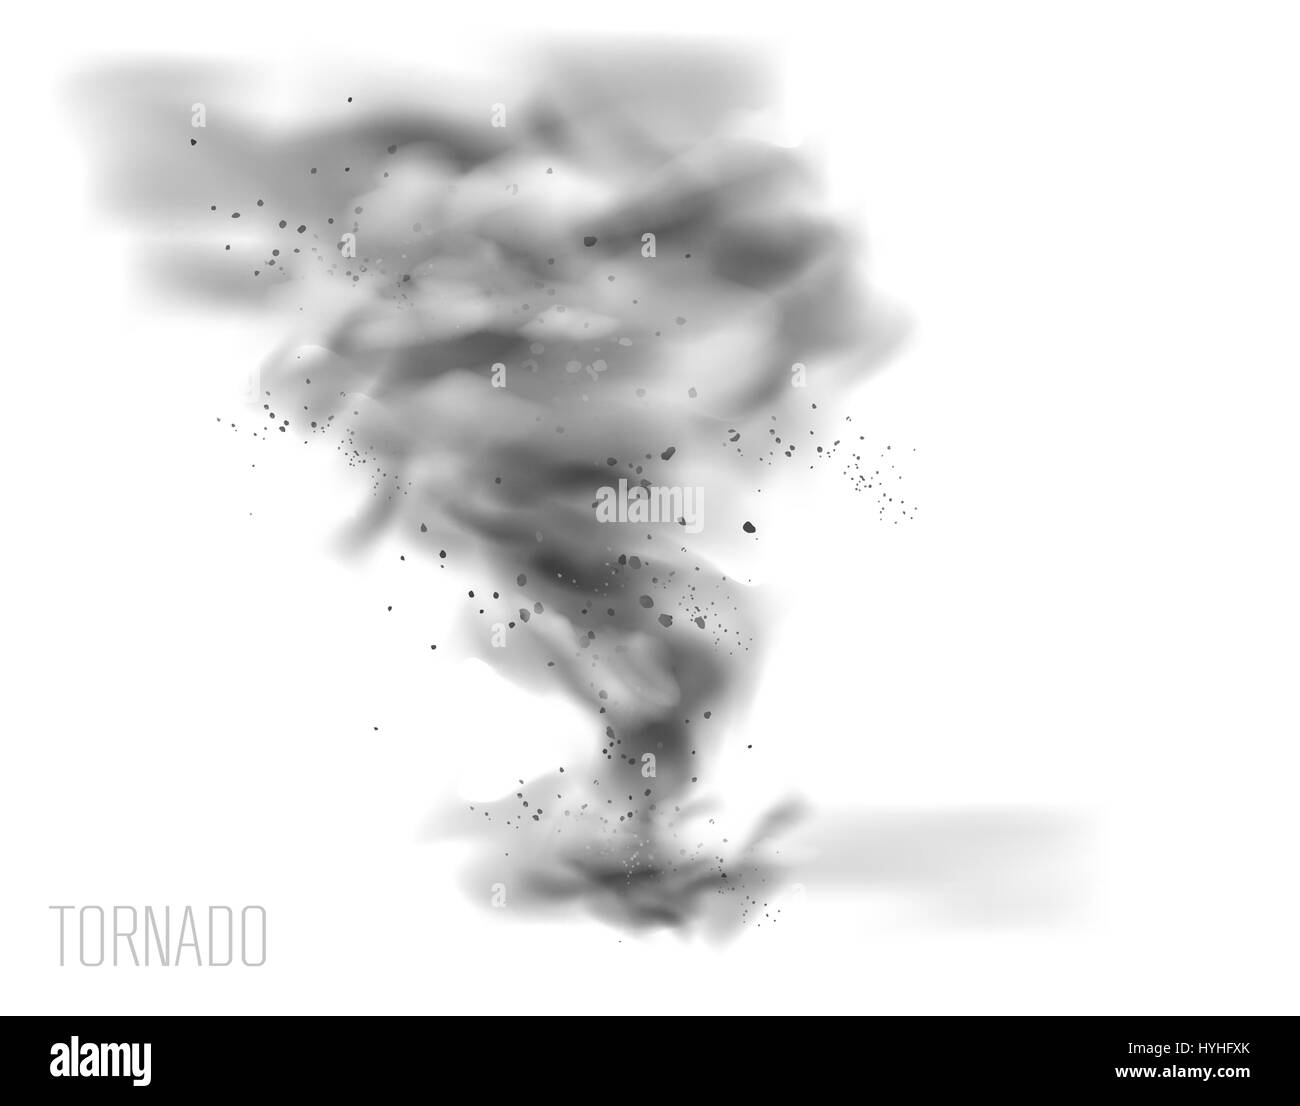 tornado on a white background. Vector illustration. Stock Vector